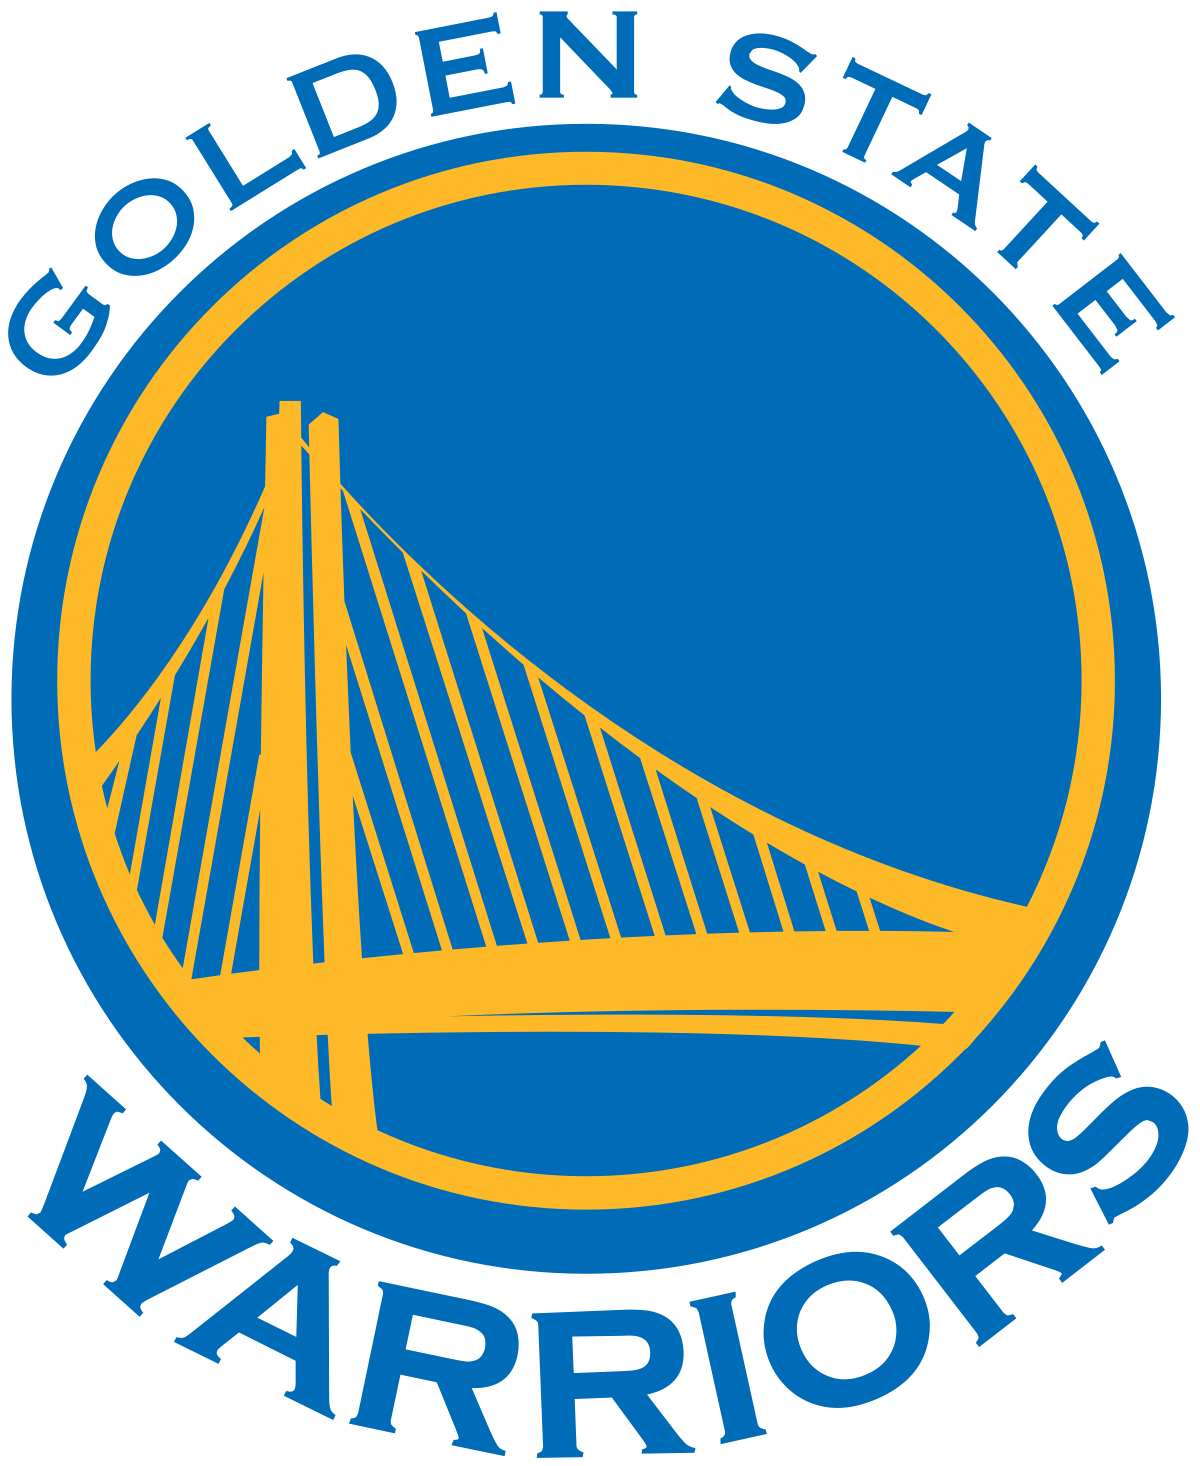 Santa Cruz Basketball Logo - Golden State Warriors